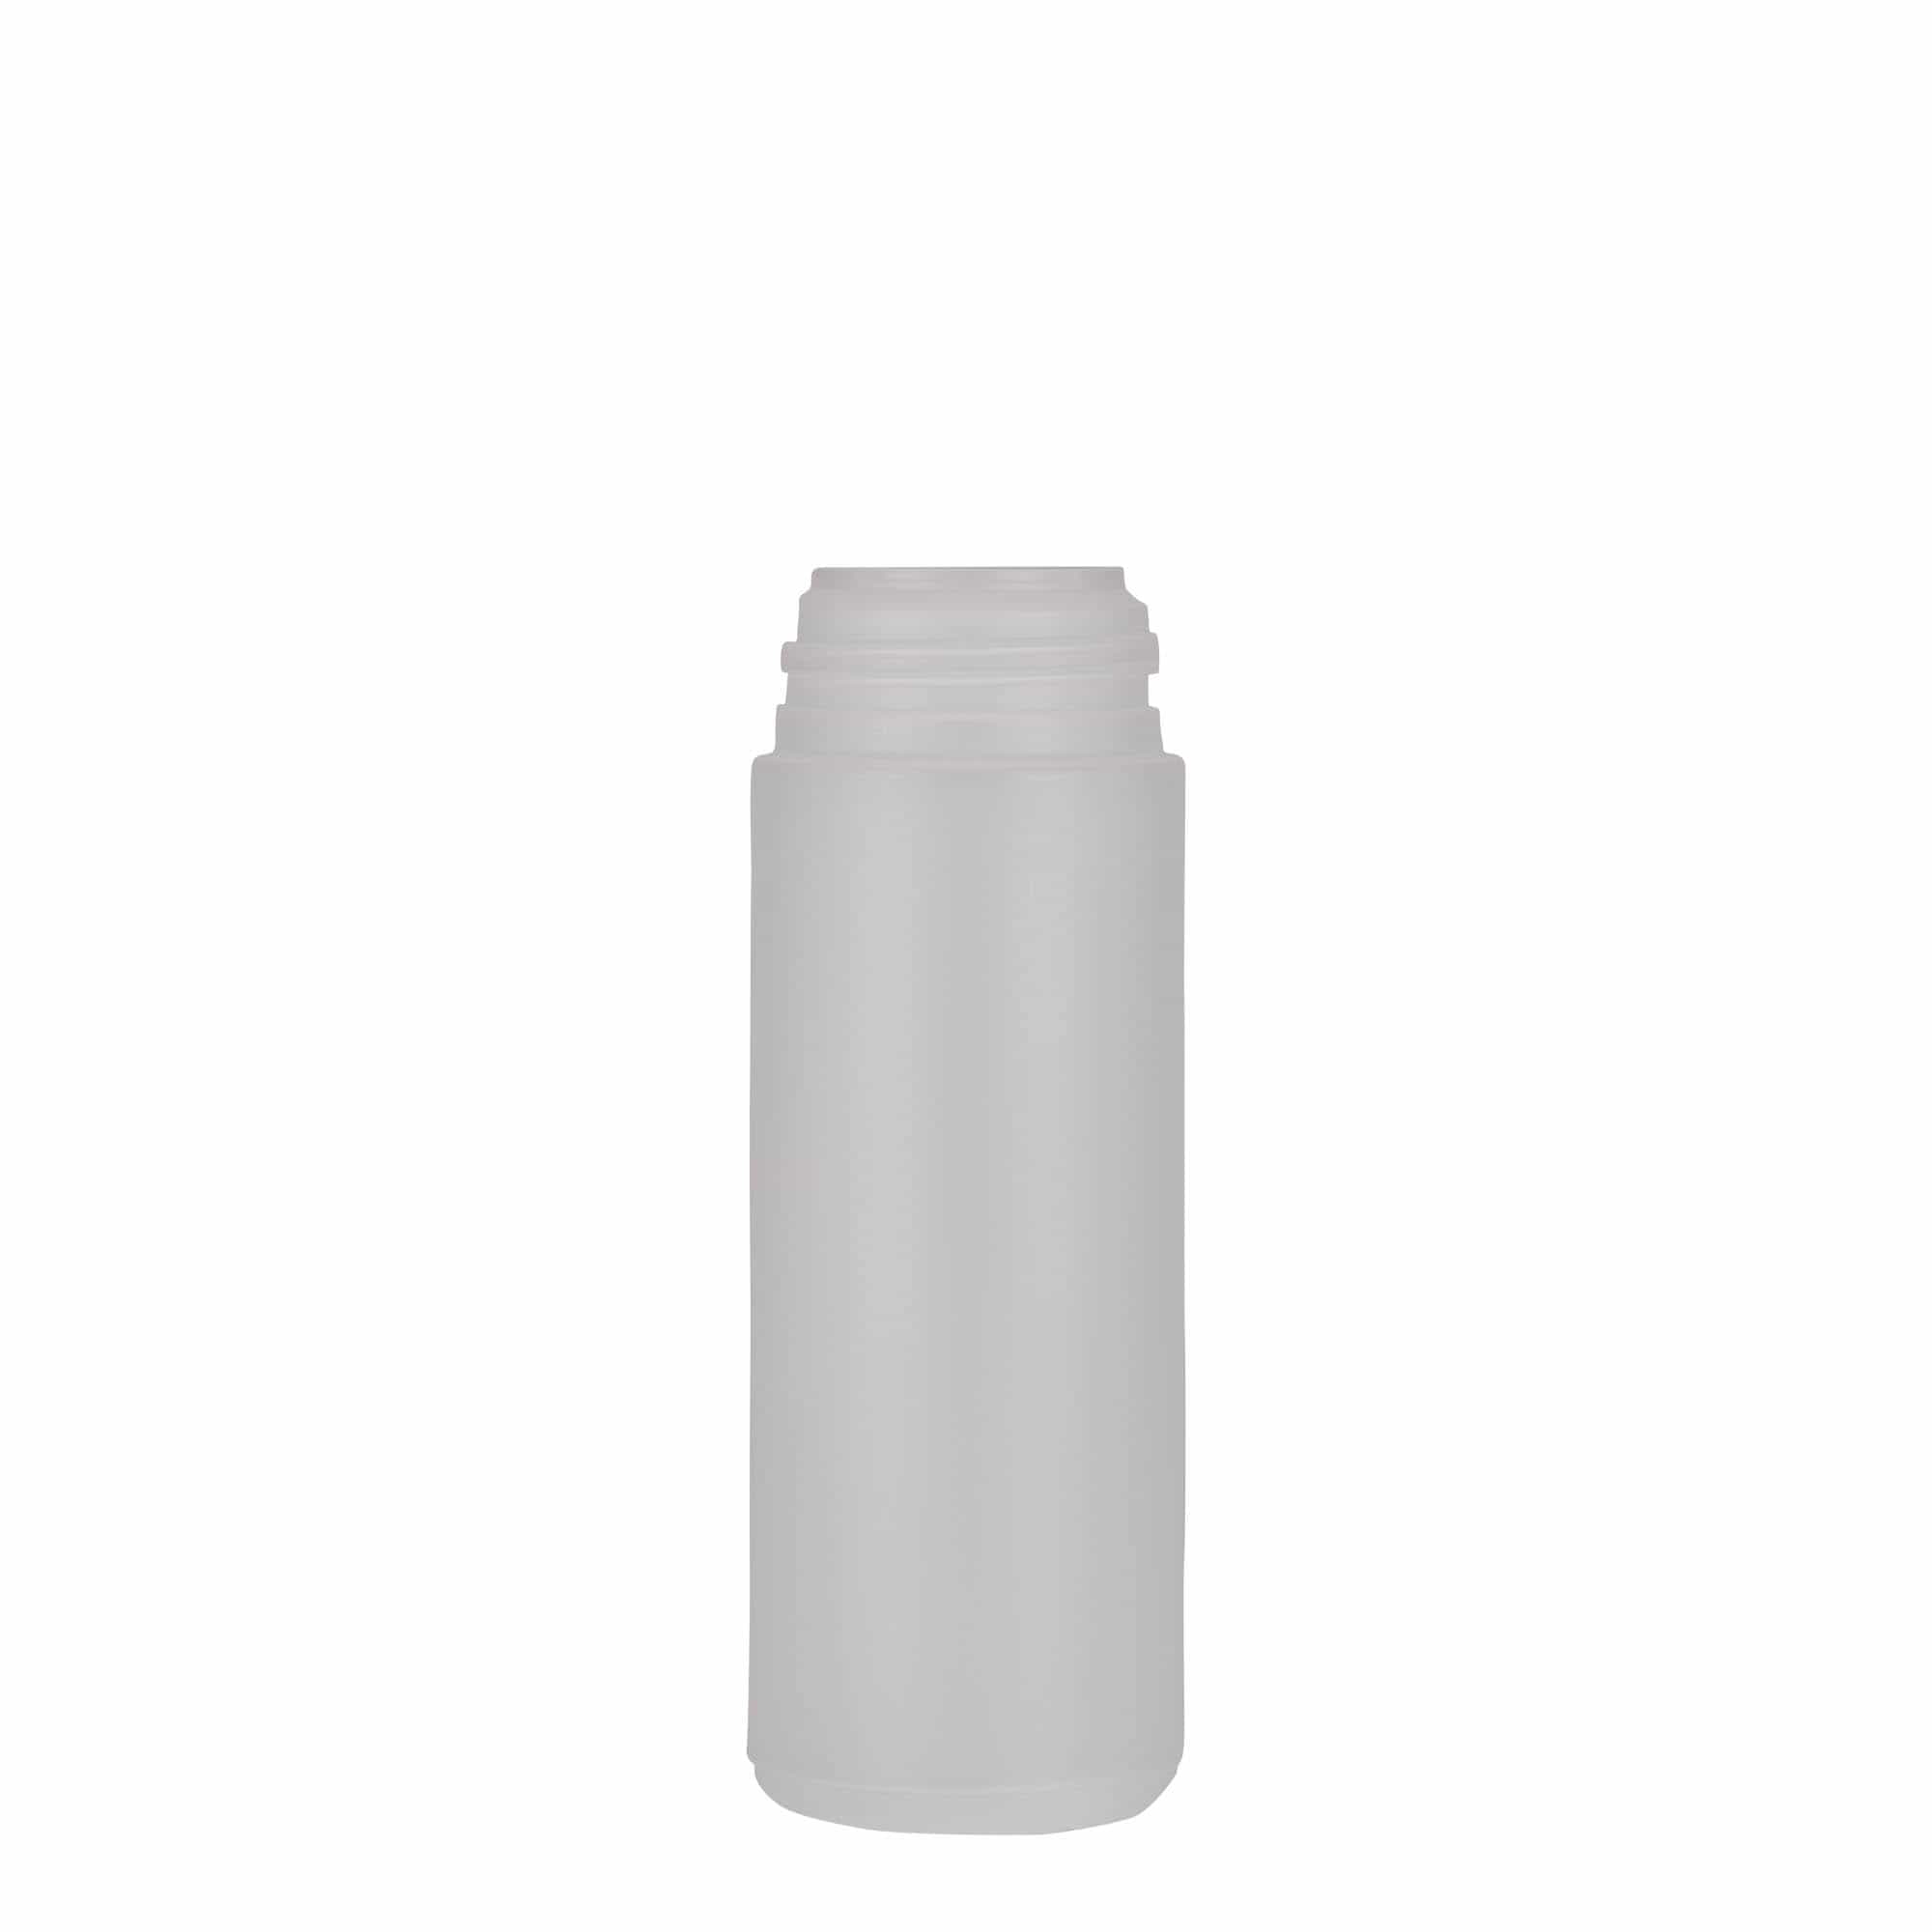 150 ml dispenser bottle 'Foamer', PE plastic, natural, closure: screw cap